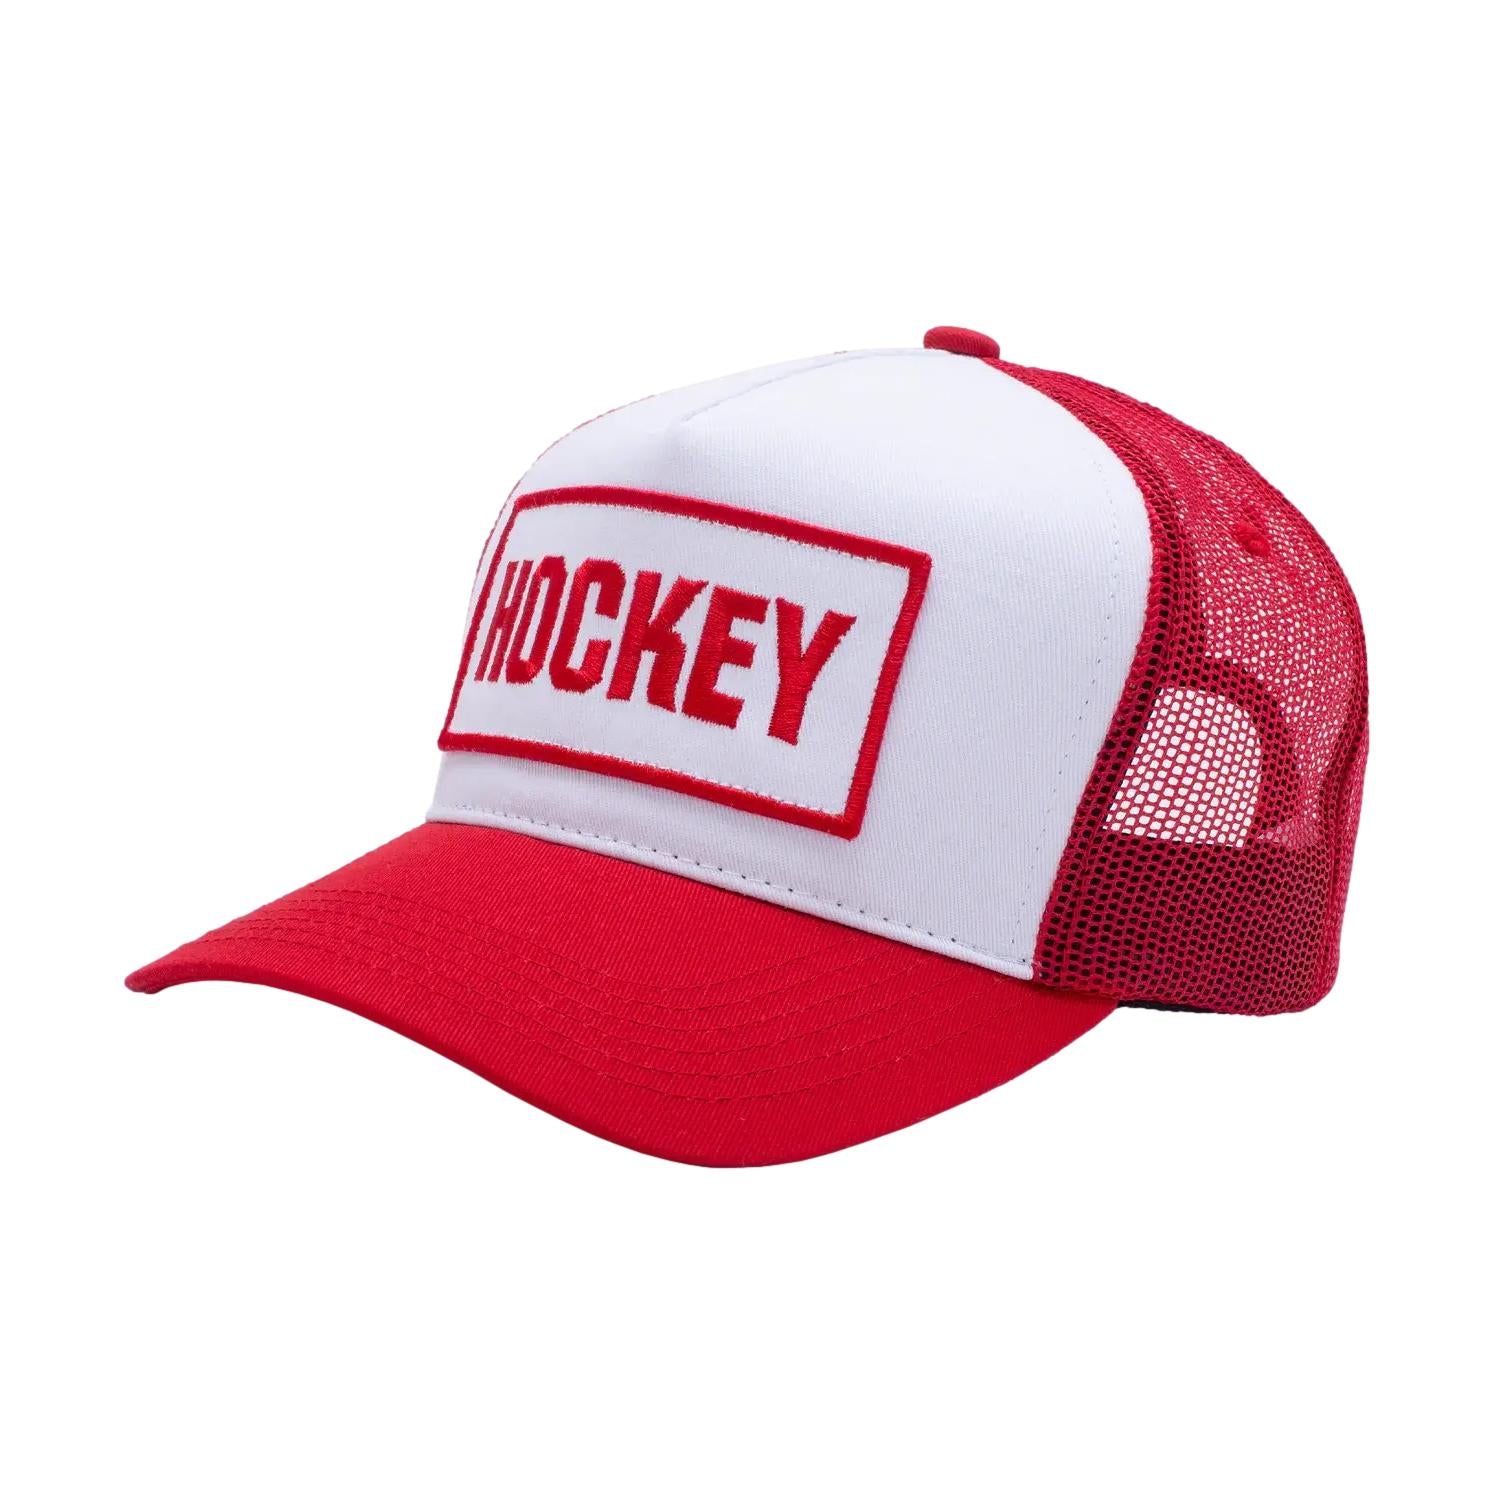 Hockey Truckstop Hat Red - Venue Skateboards